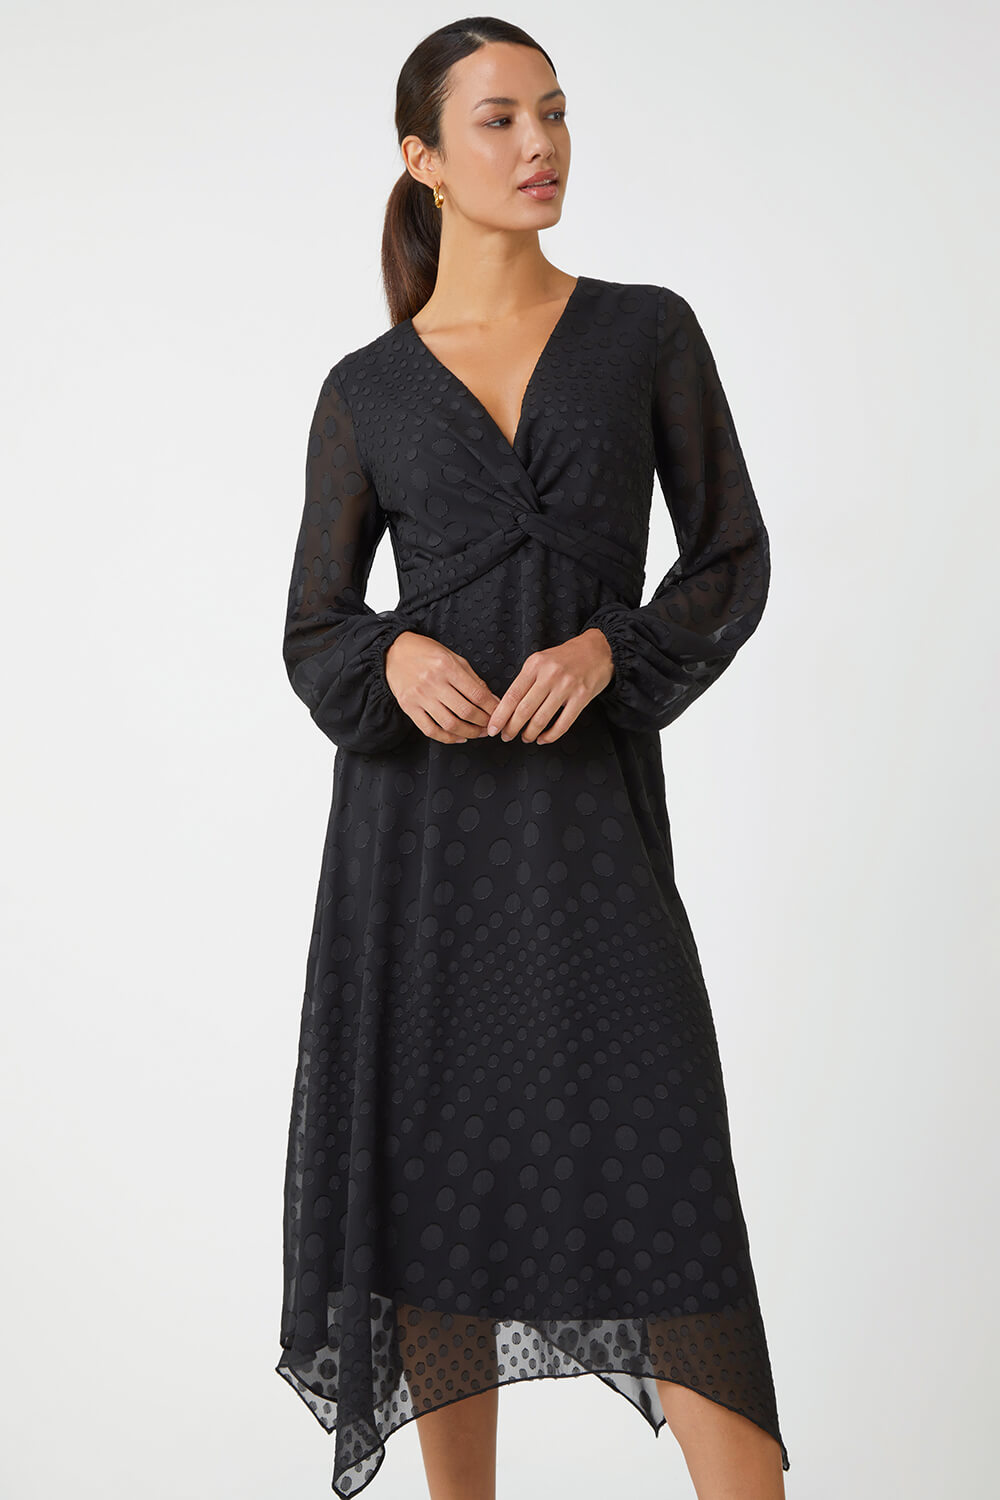 Black Polka Dot Twist Detail Chiffon Dress, Image 2 of 5